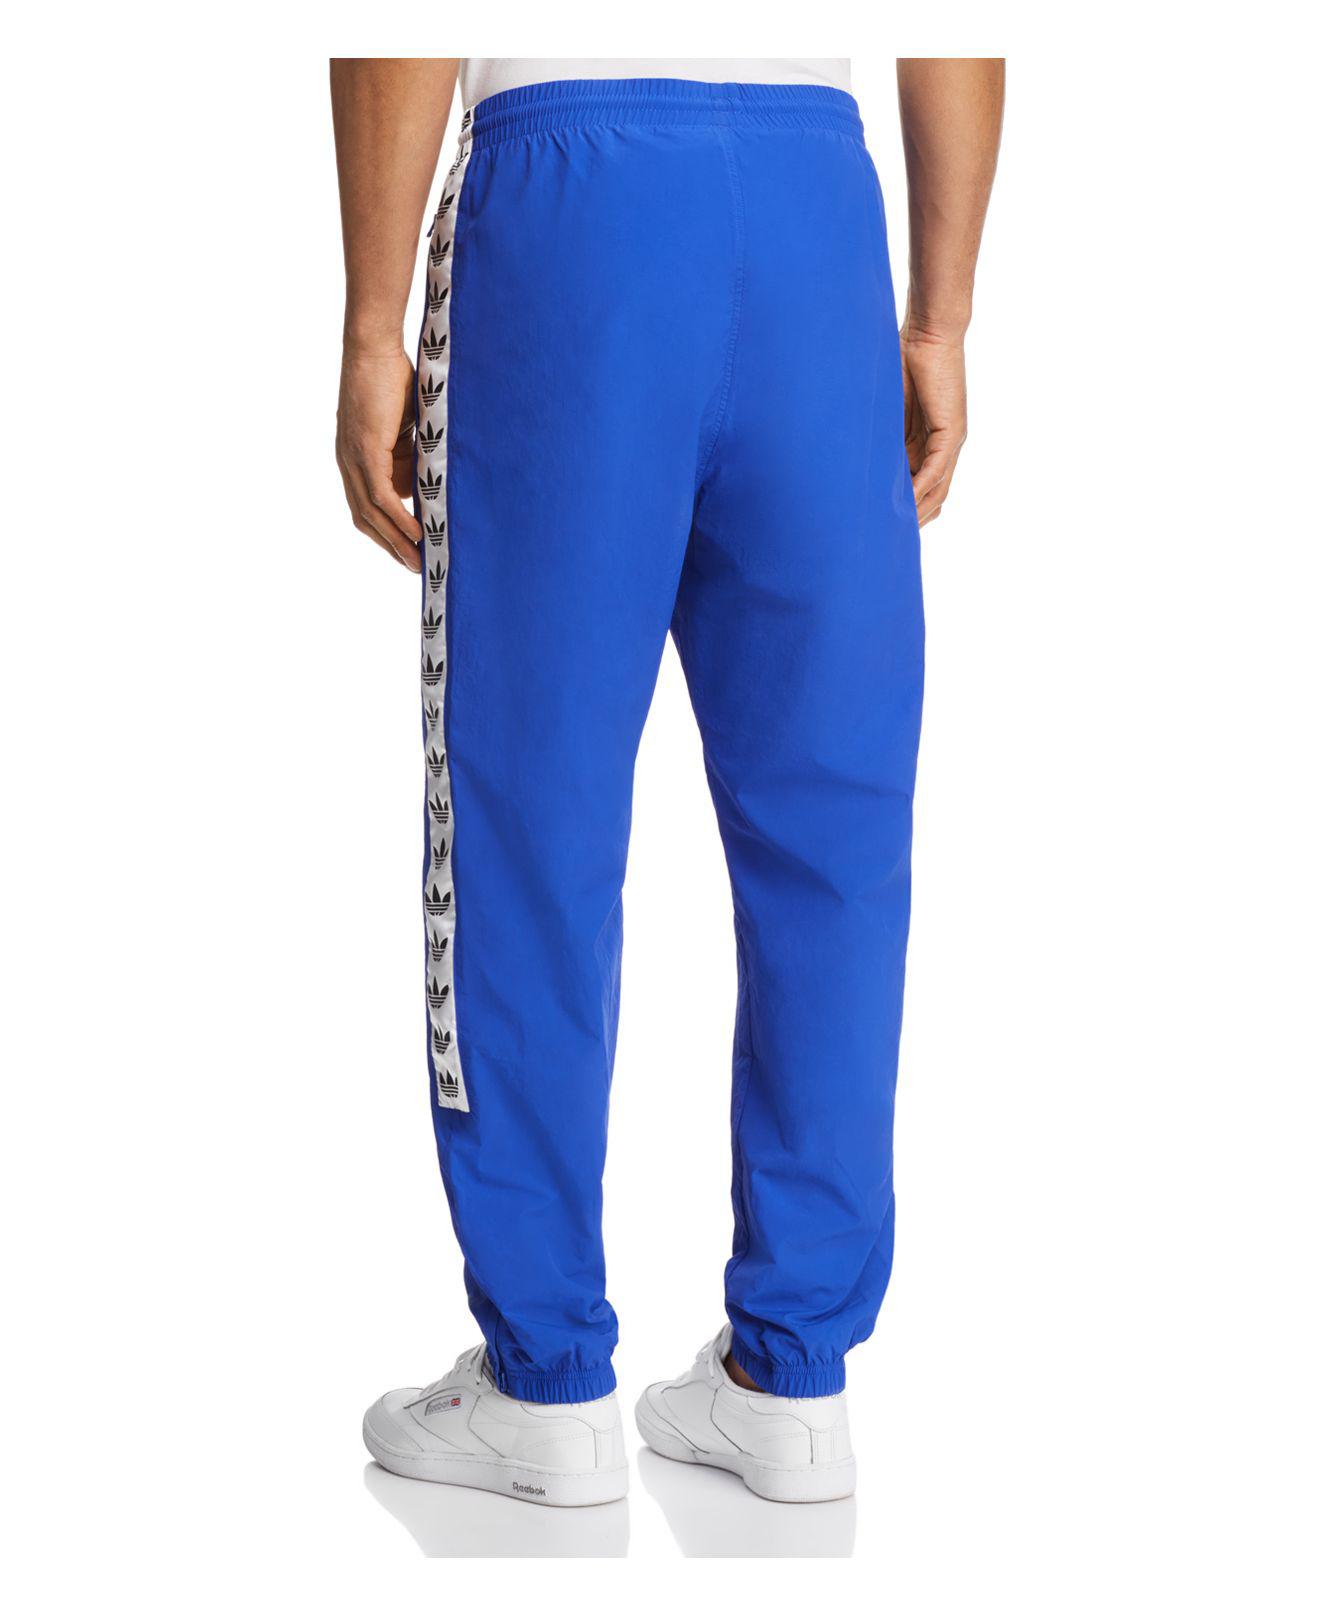 adidas Originals Tnt Wind Track Pants in Blue for Men - Lyst